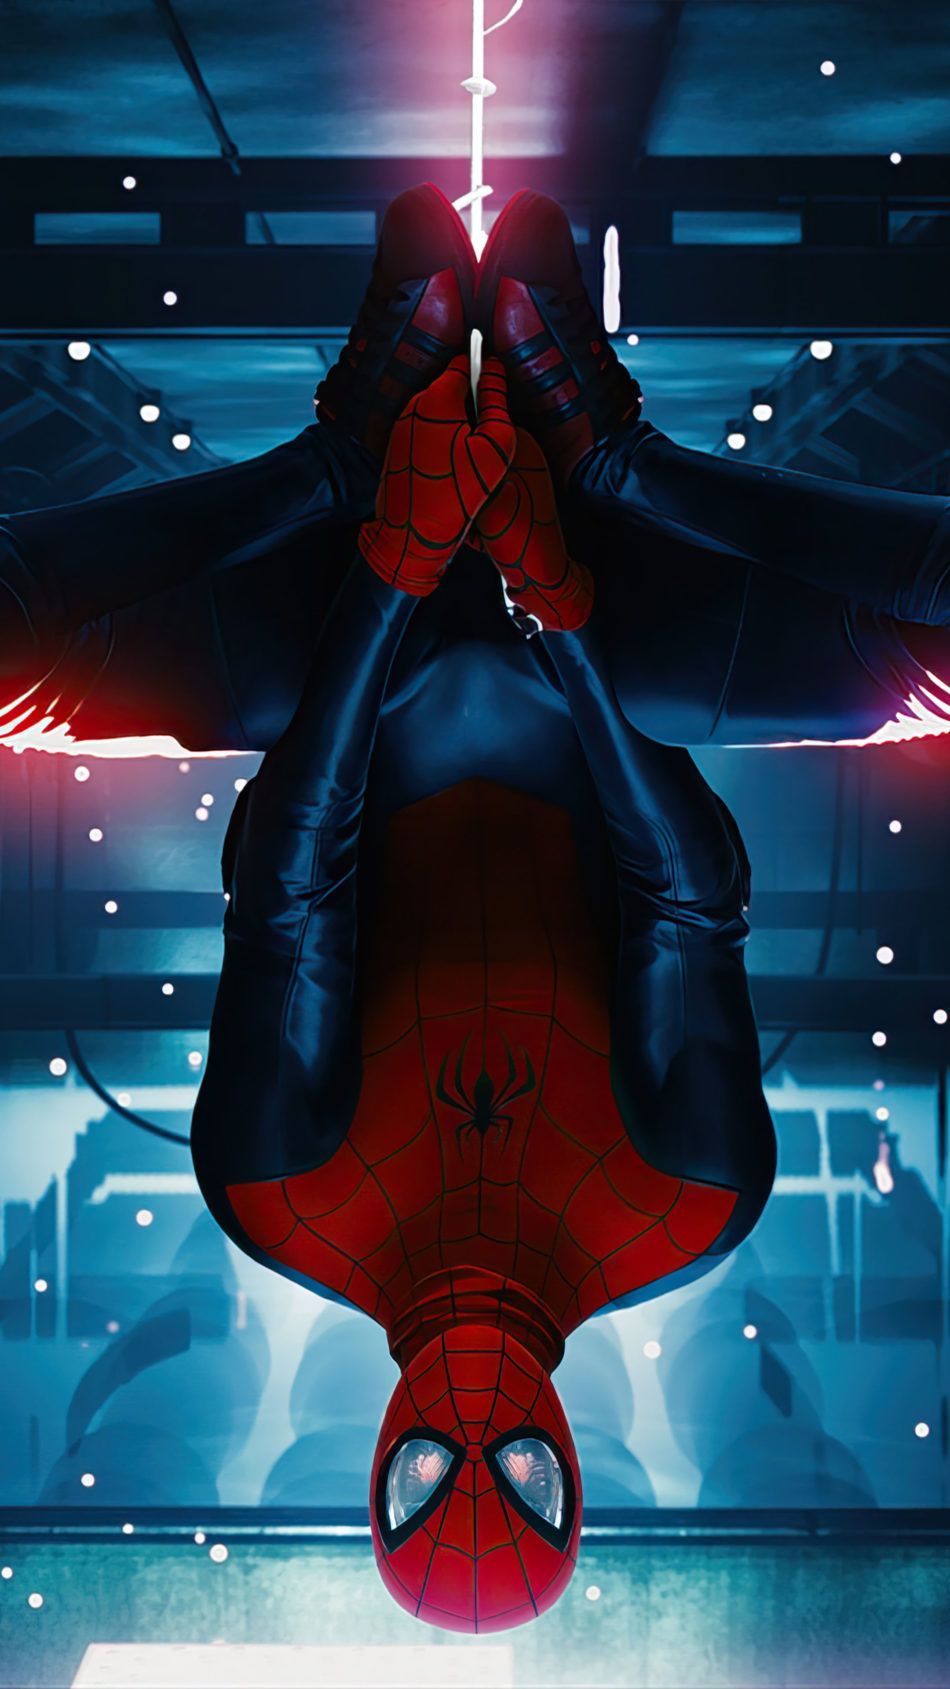 Spider Man Miles Morales Hanging Upside Down 4K Ultra HD Mobile Wallpaper. Spiderman, Spiderman Comic, Spiderman Upside Down